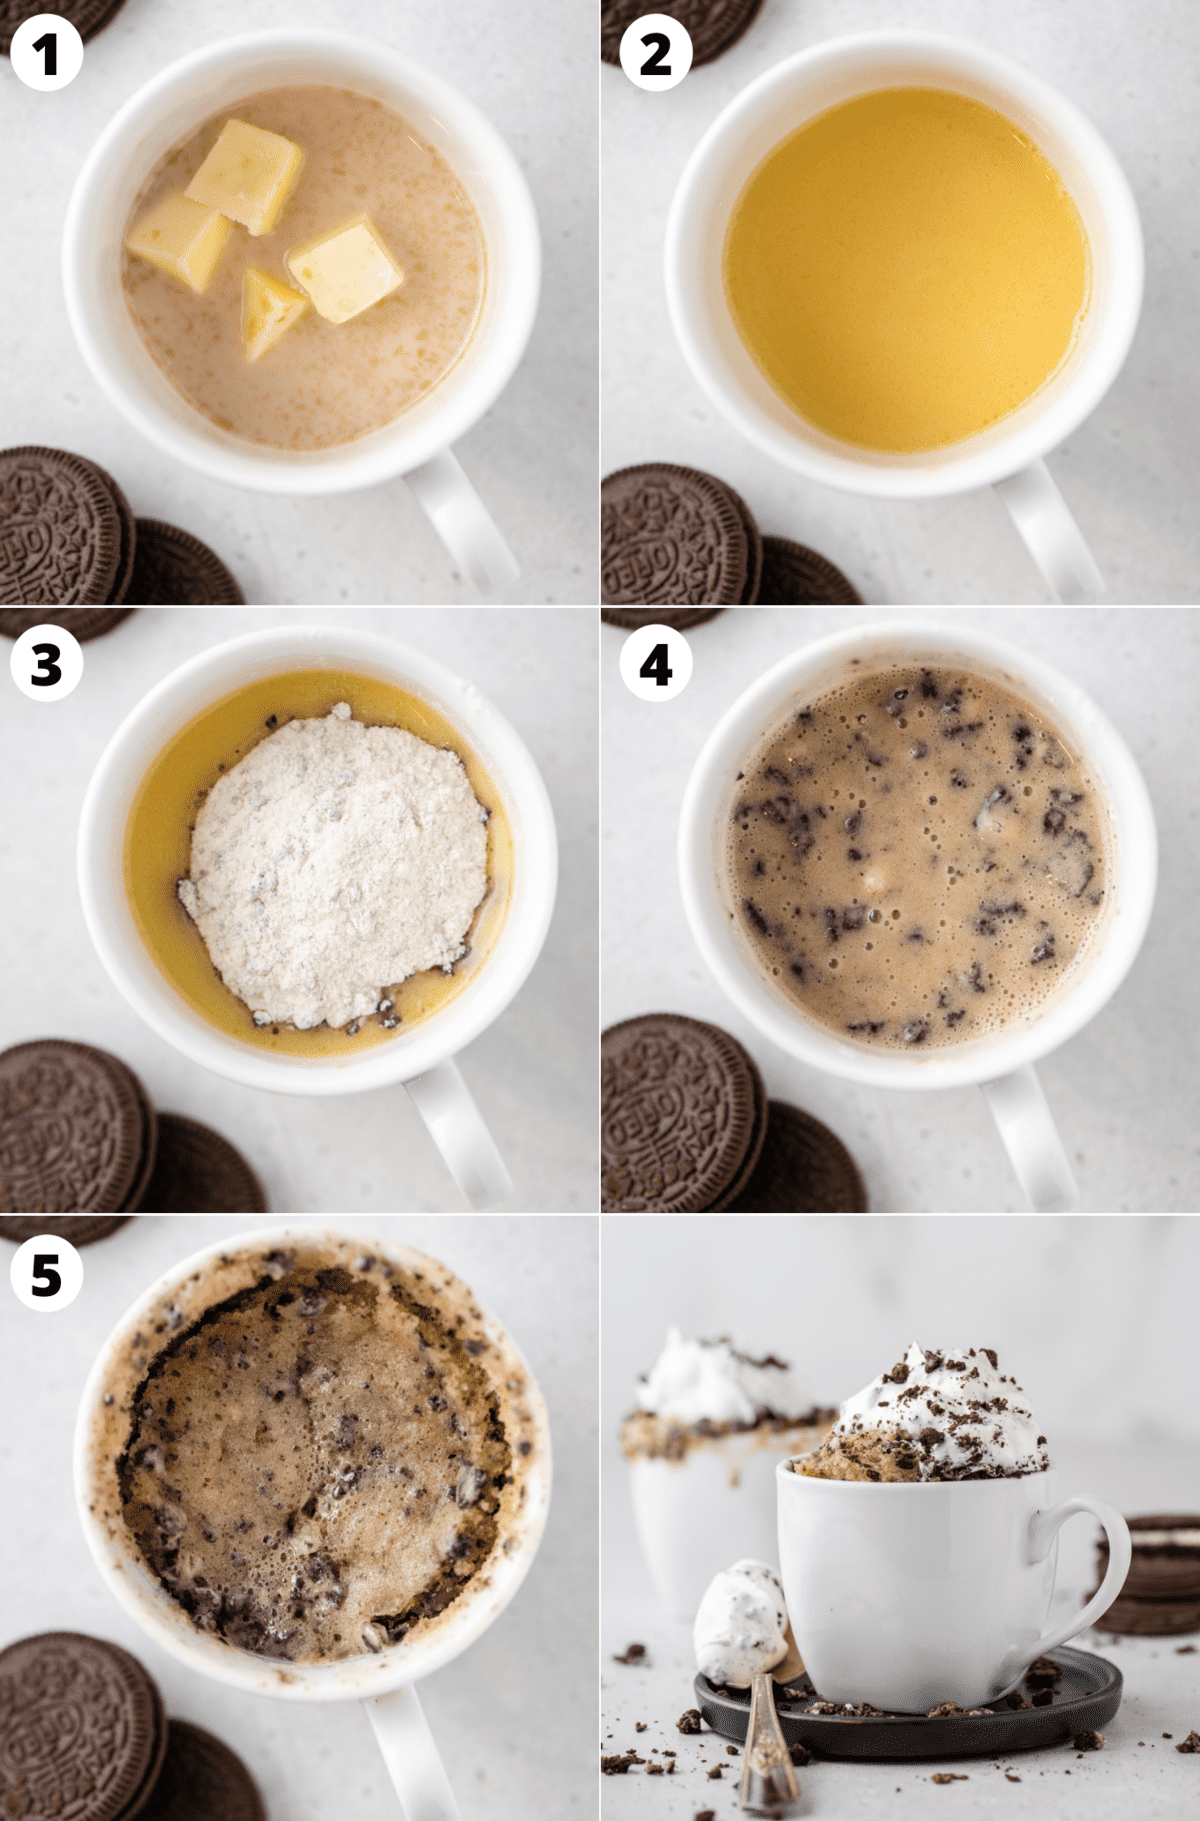 6 photos showing process of making Oreo mug cake